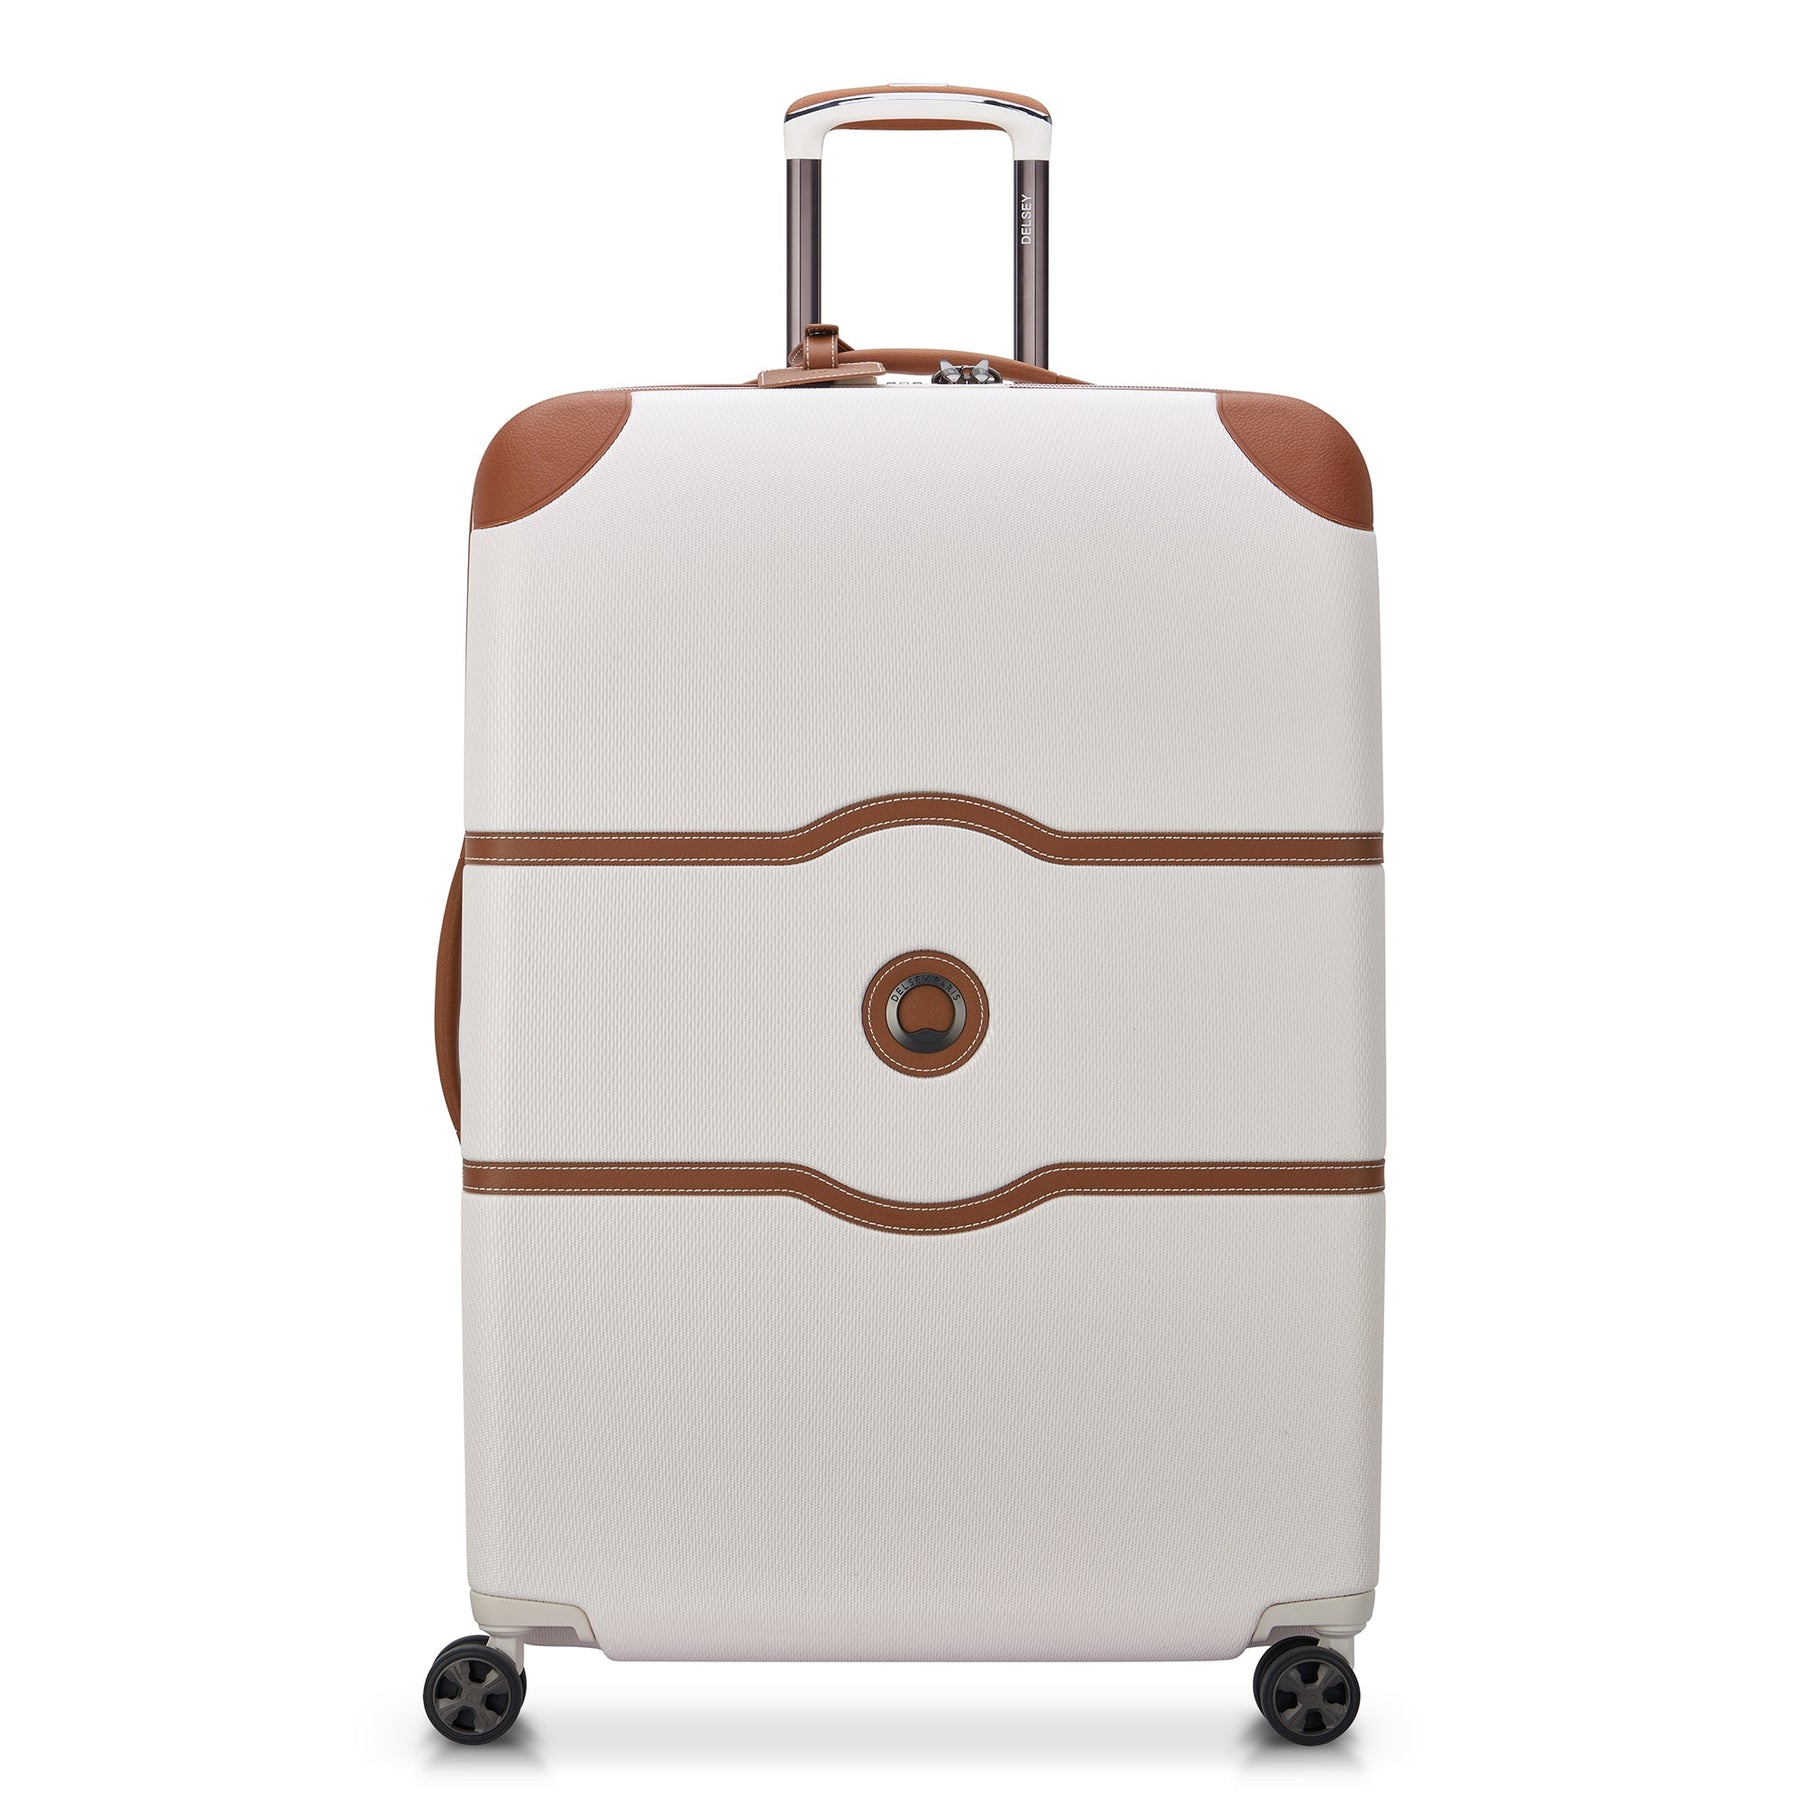 Delsey Paris Alexis 3-Piece Lightweight Luggage Set with TSA Lock